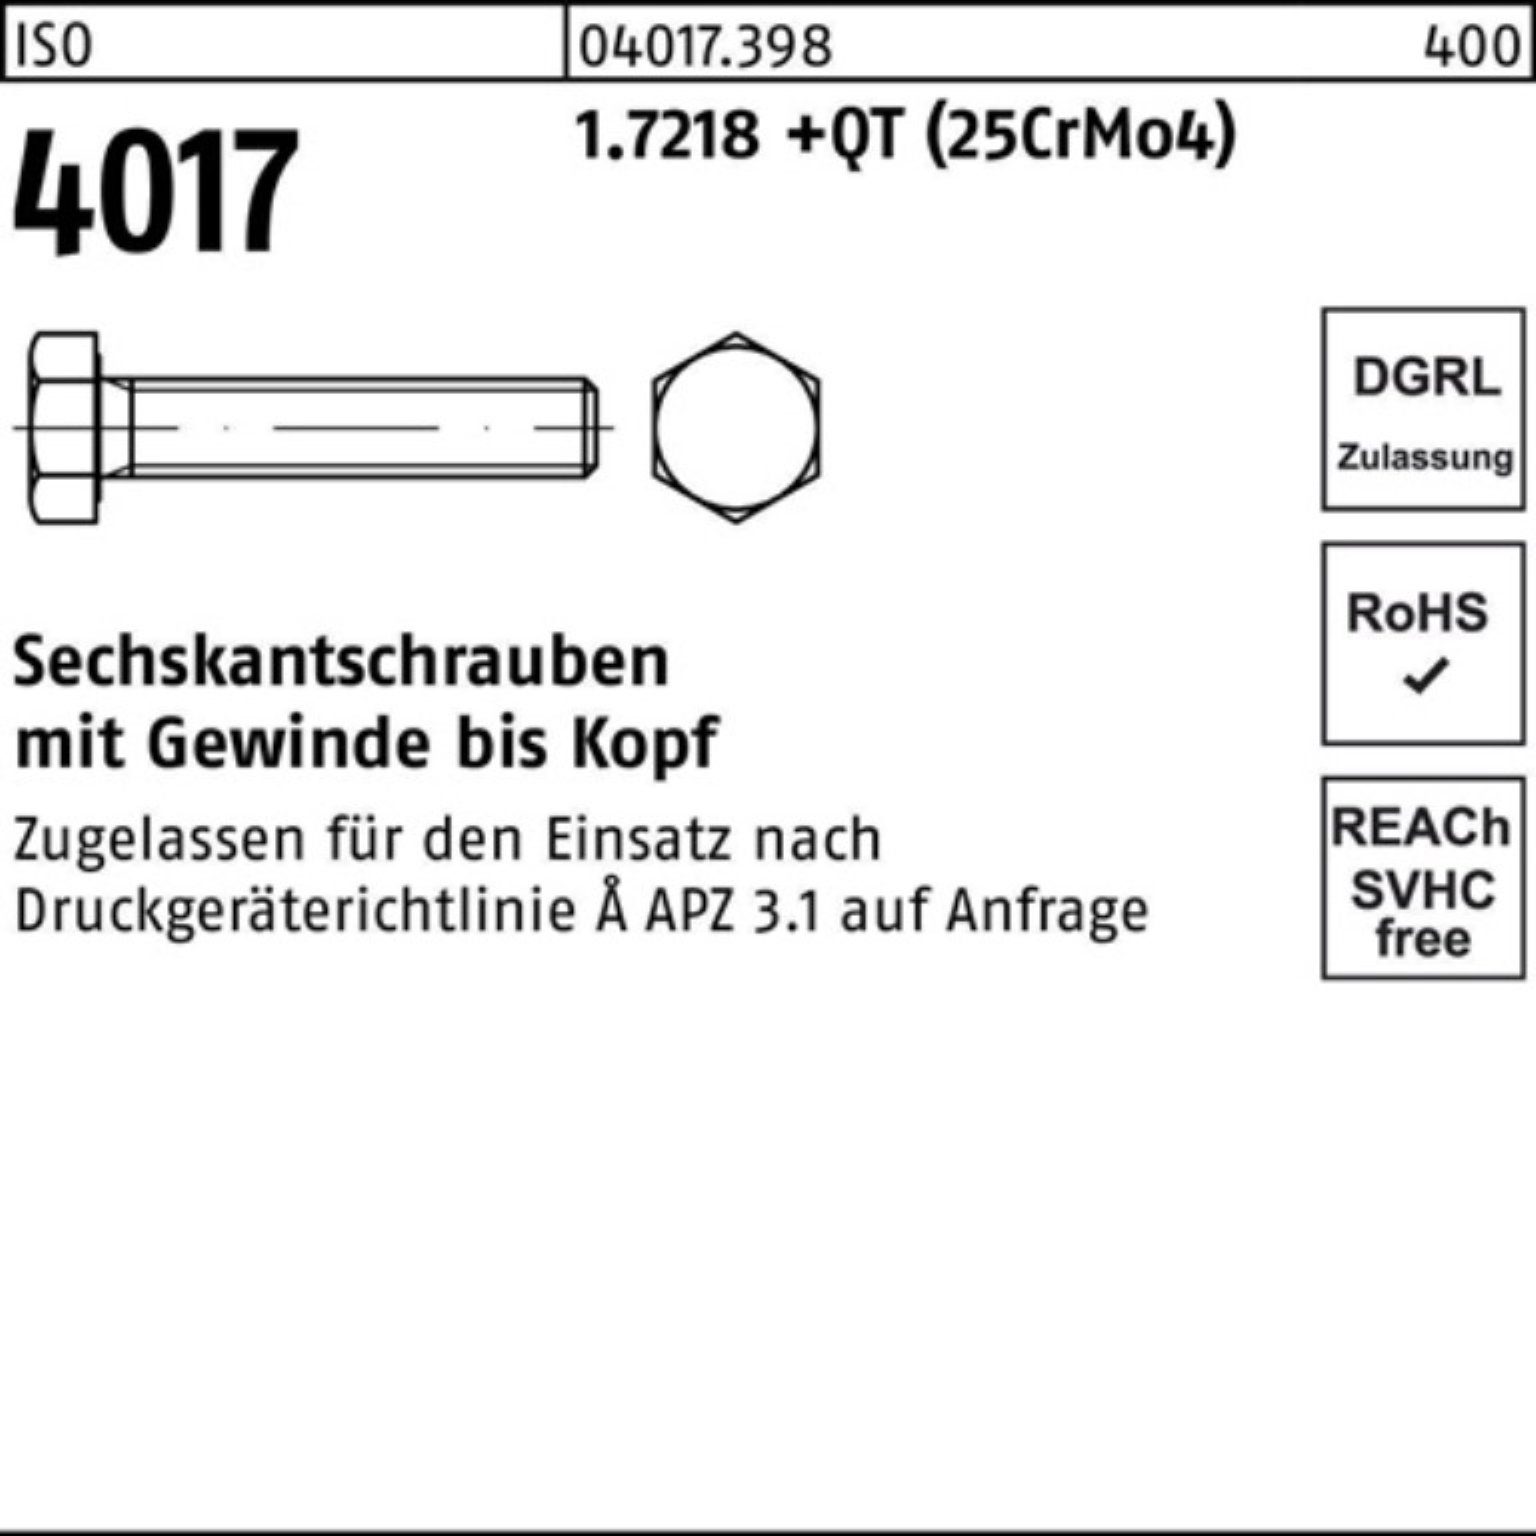 Sechskantschraube Bufab VG 100er M30x +QT 1.7218 110 Pack ISO (25CrMo4) 4017 Sechskantschraube